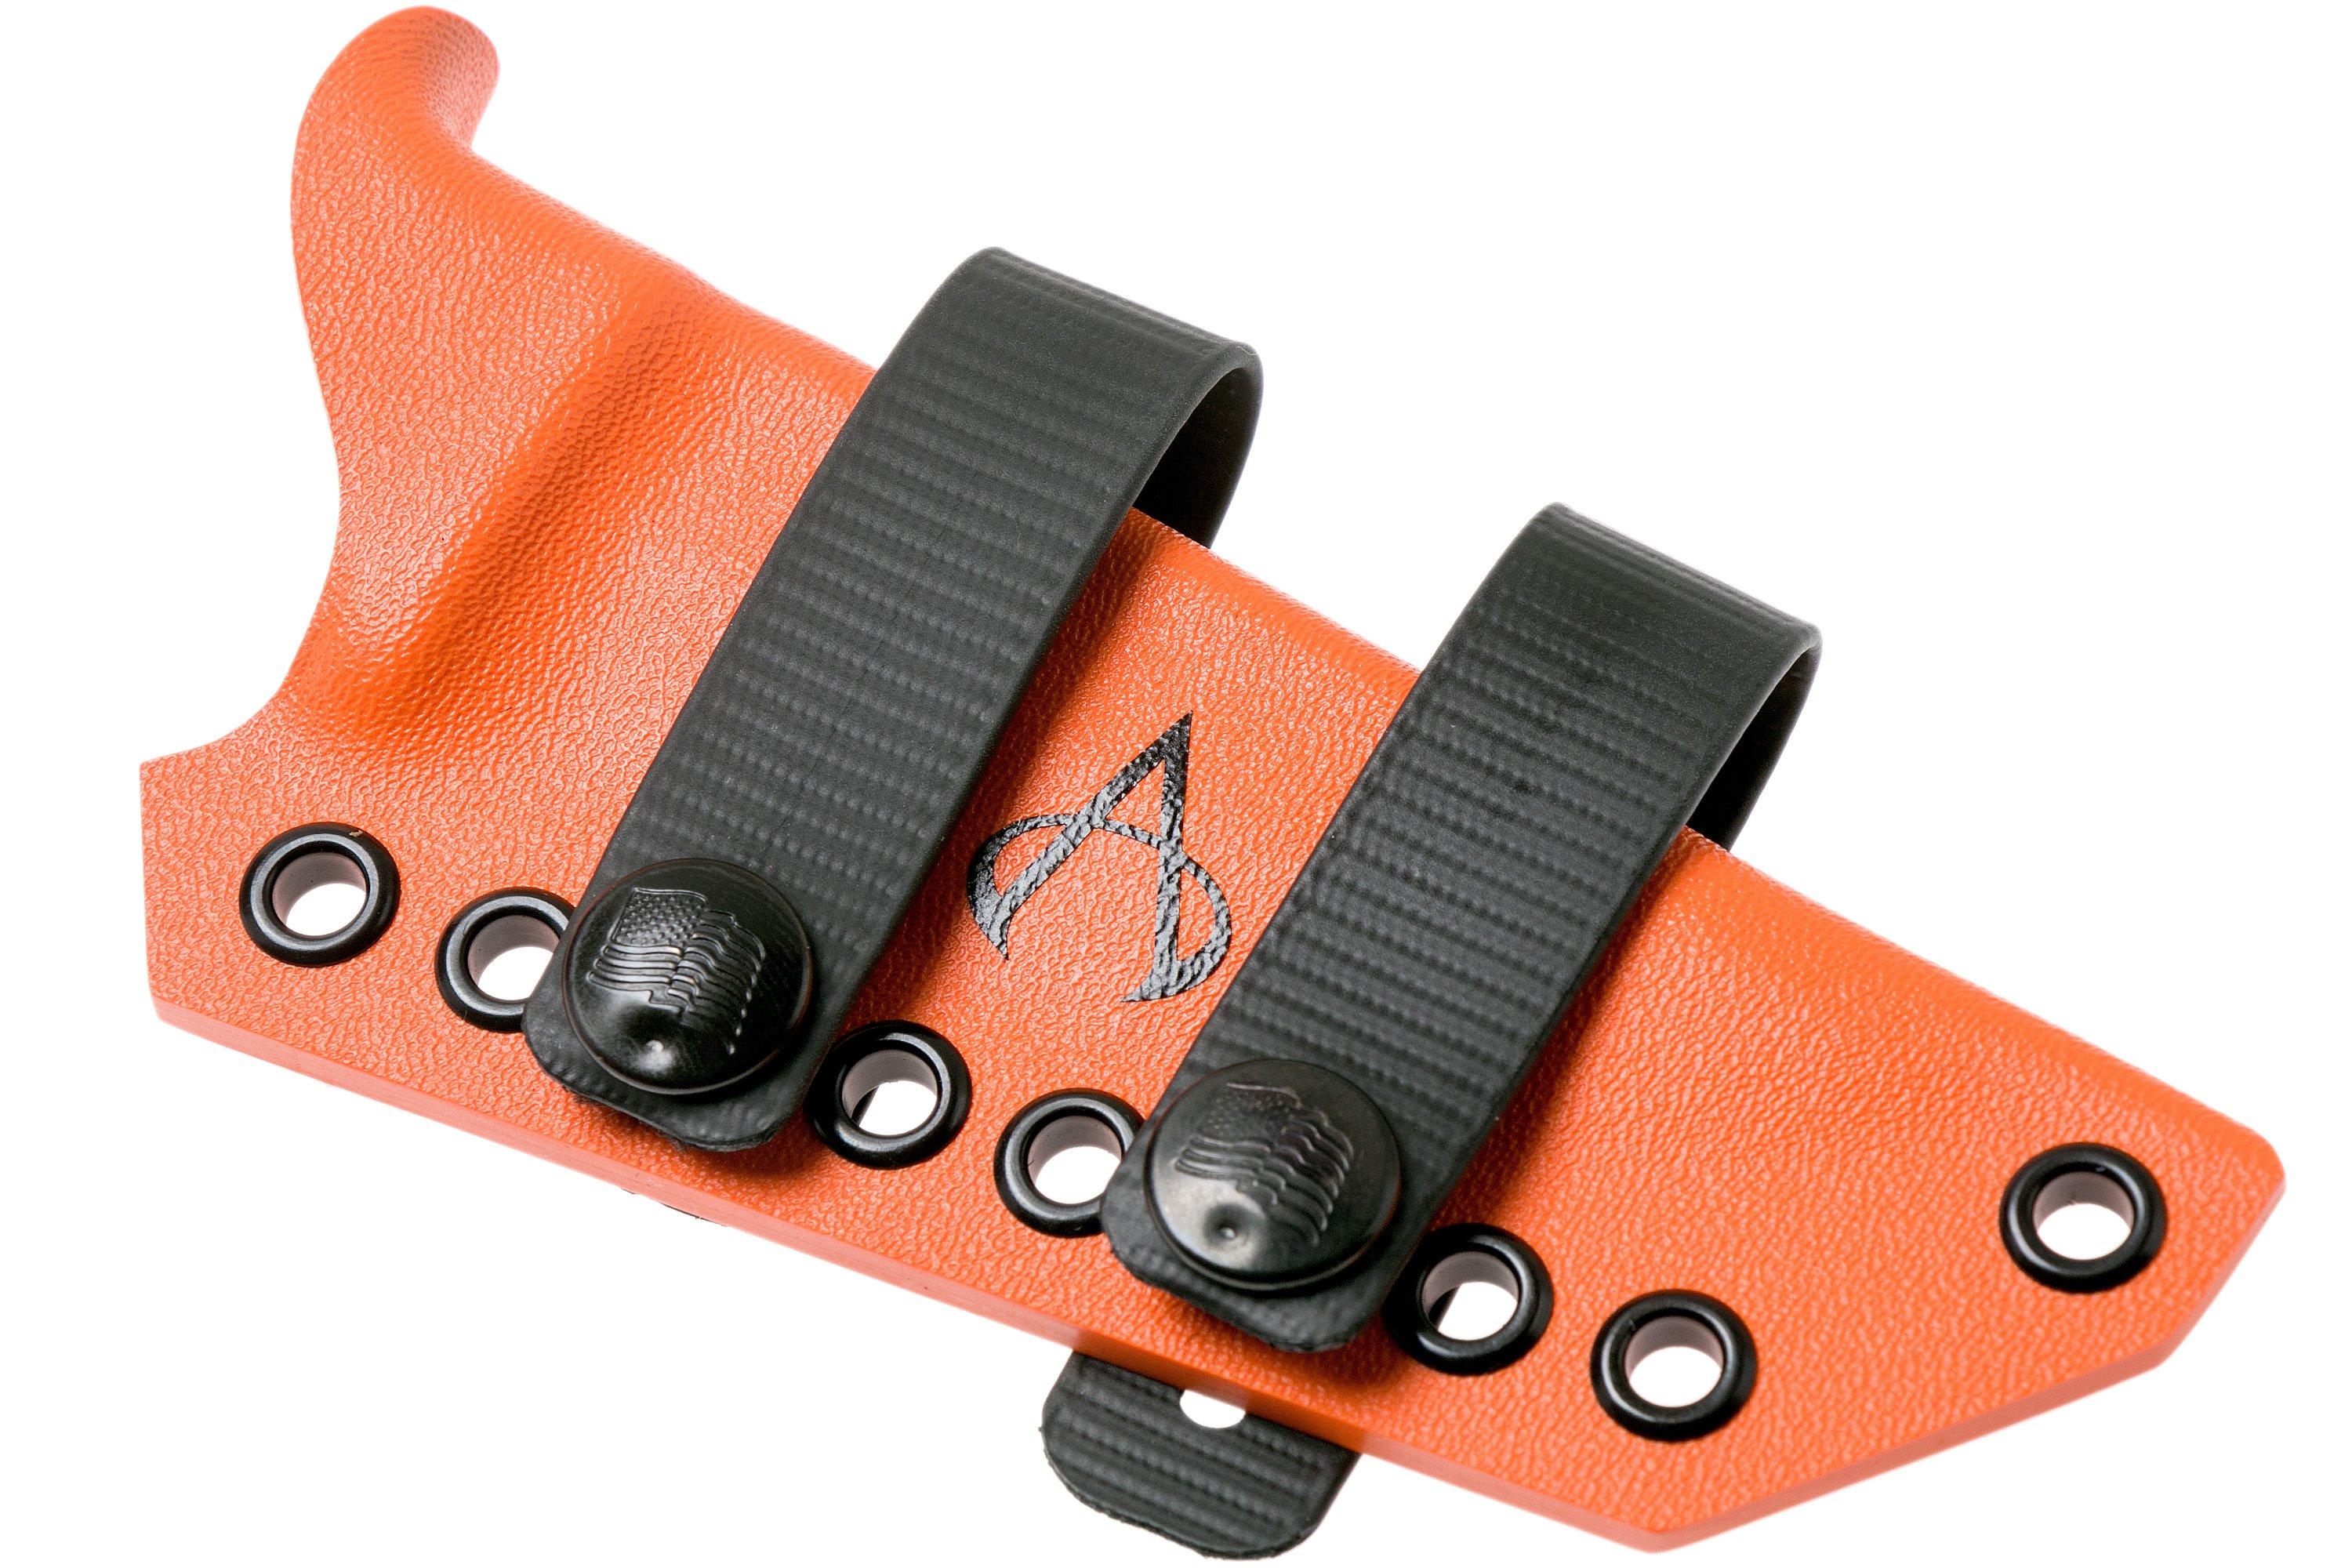 Armatus Carry Architect sheath for the Fällkniven F1 Pro, hunter orange ...